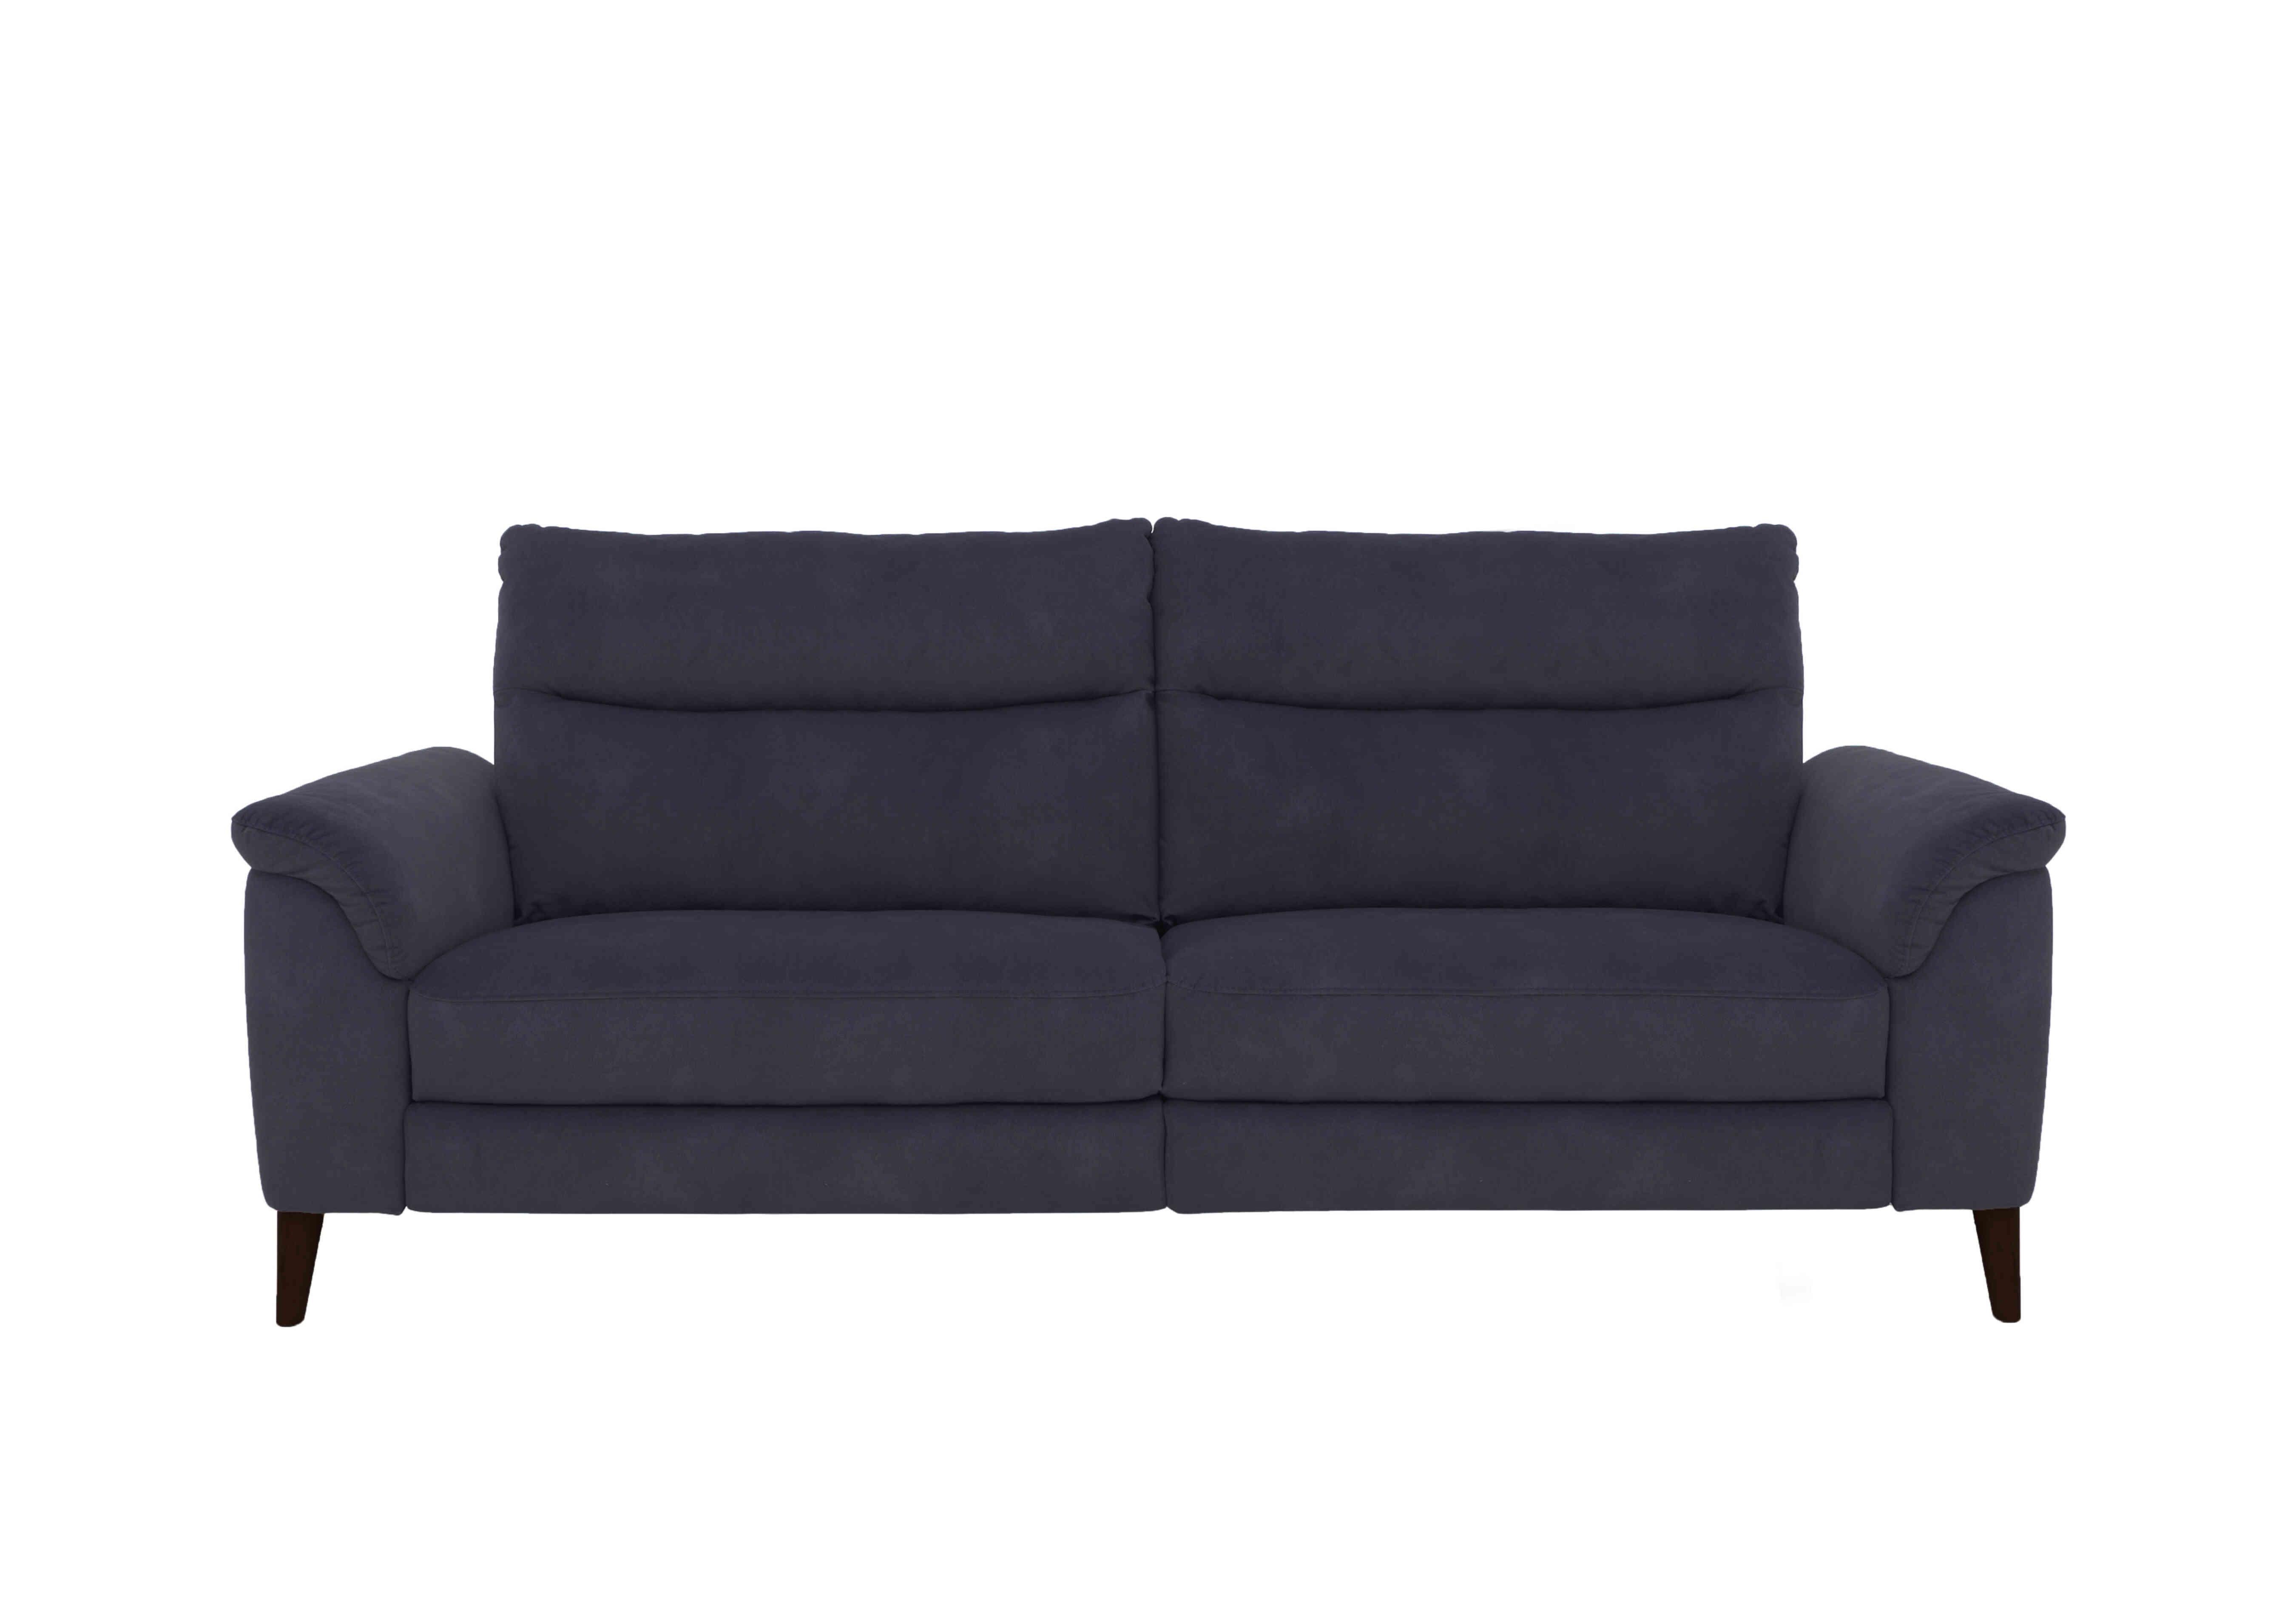 Morgan 3 Seater Fabric Sofa in Shadow Dexter 19 43519 on Furniture Village